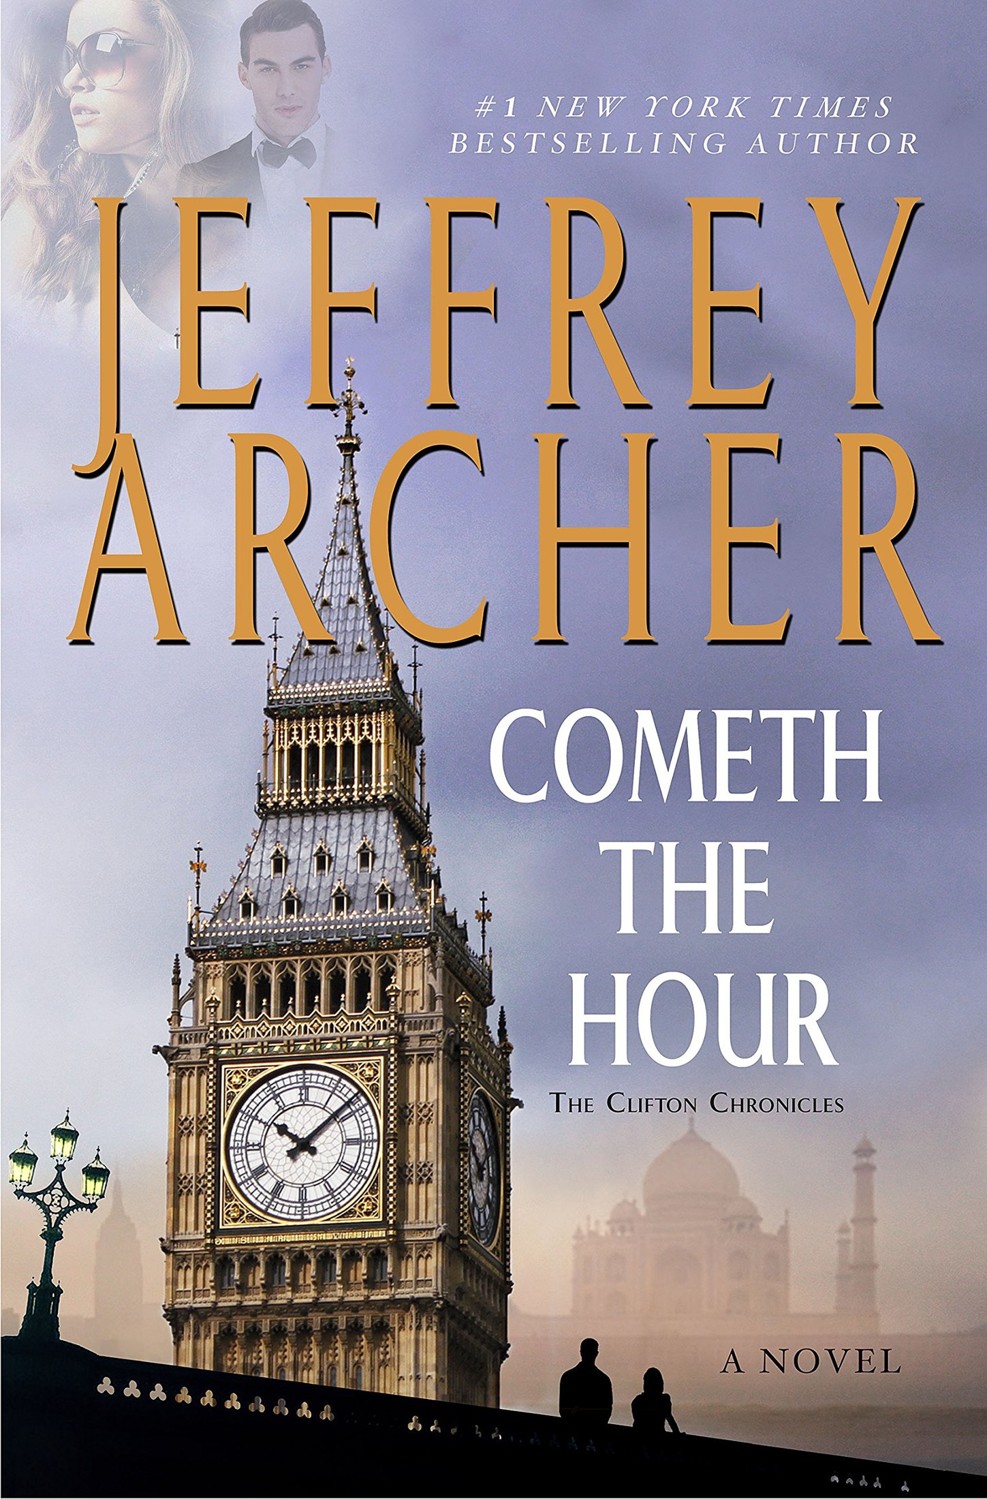 Cometh the Hour: A Novel by Jeffrey Archer